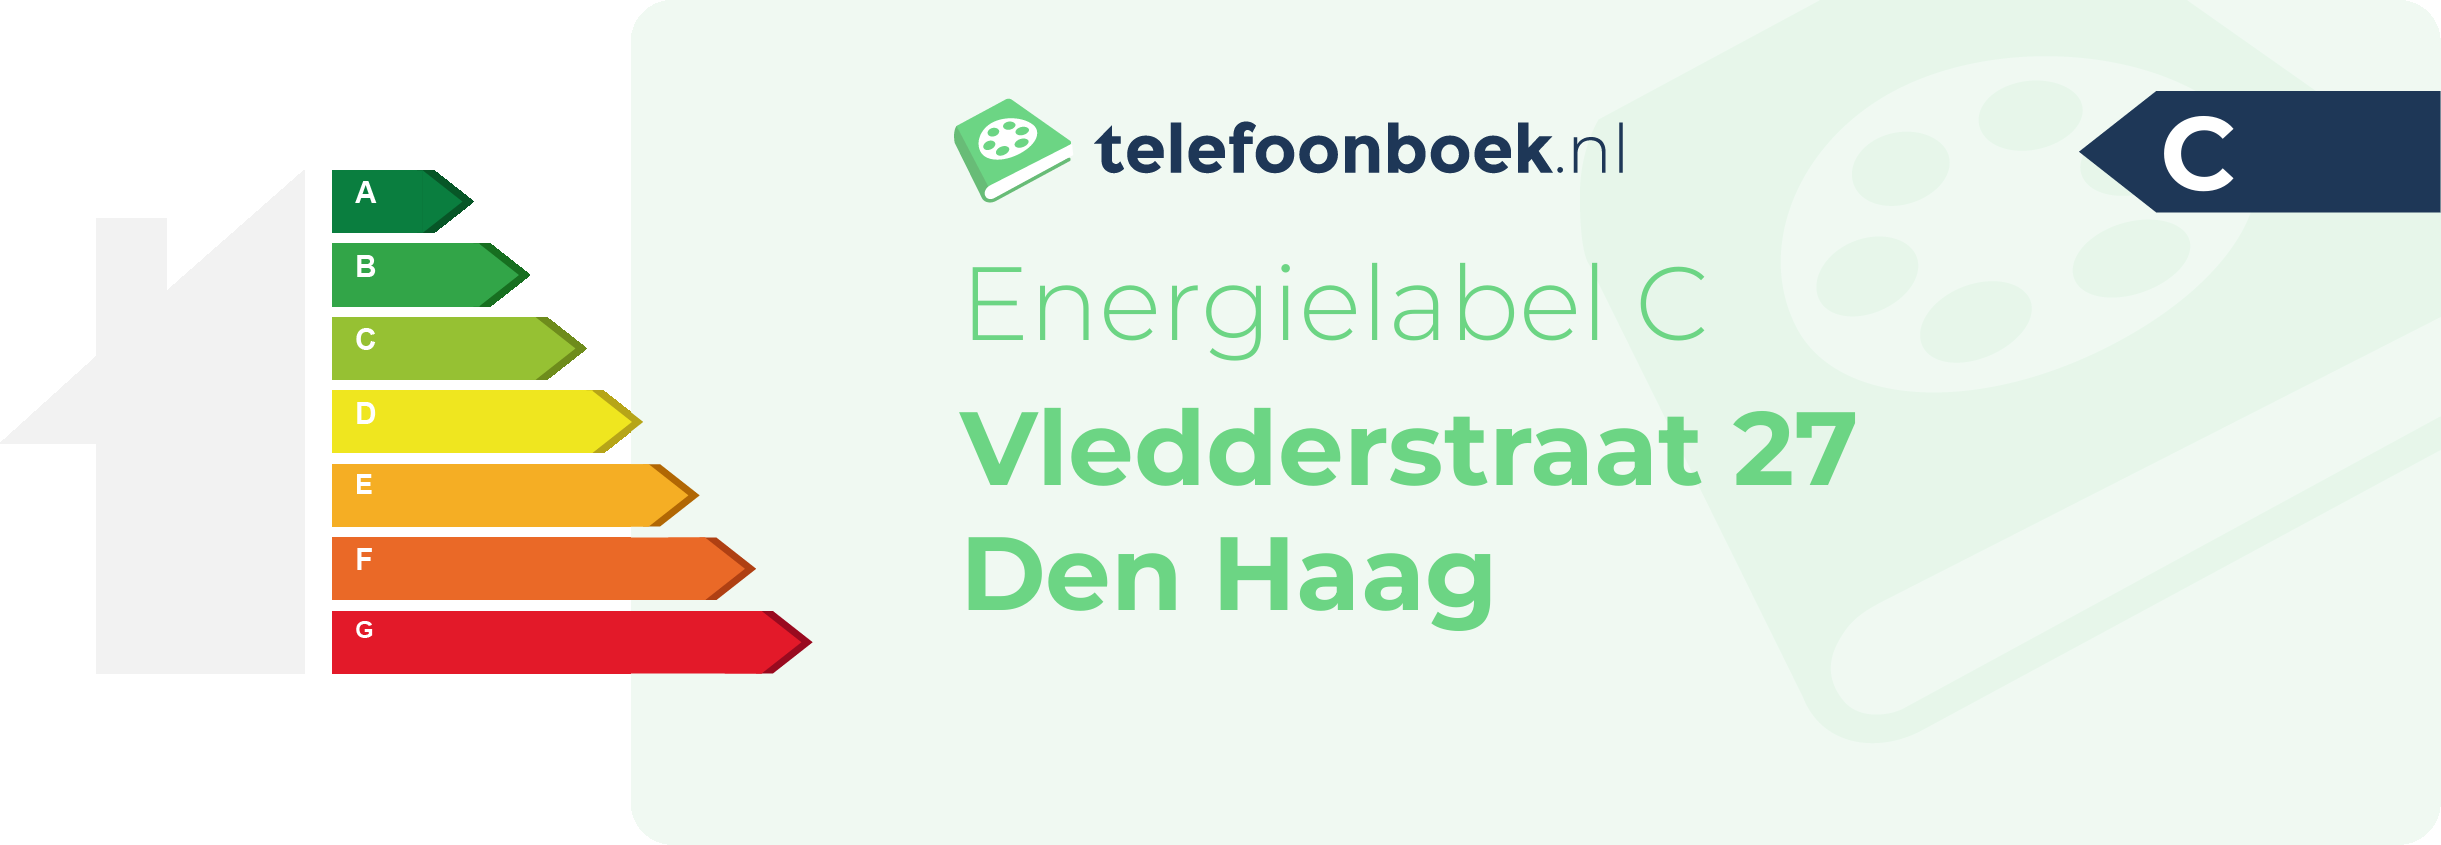 Energielabel Vledderstraat 27 Den Haag